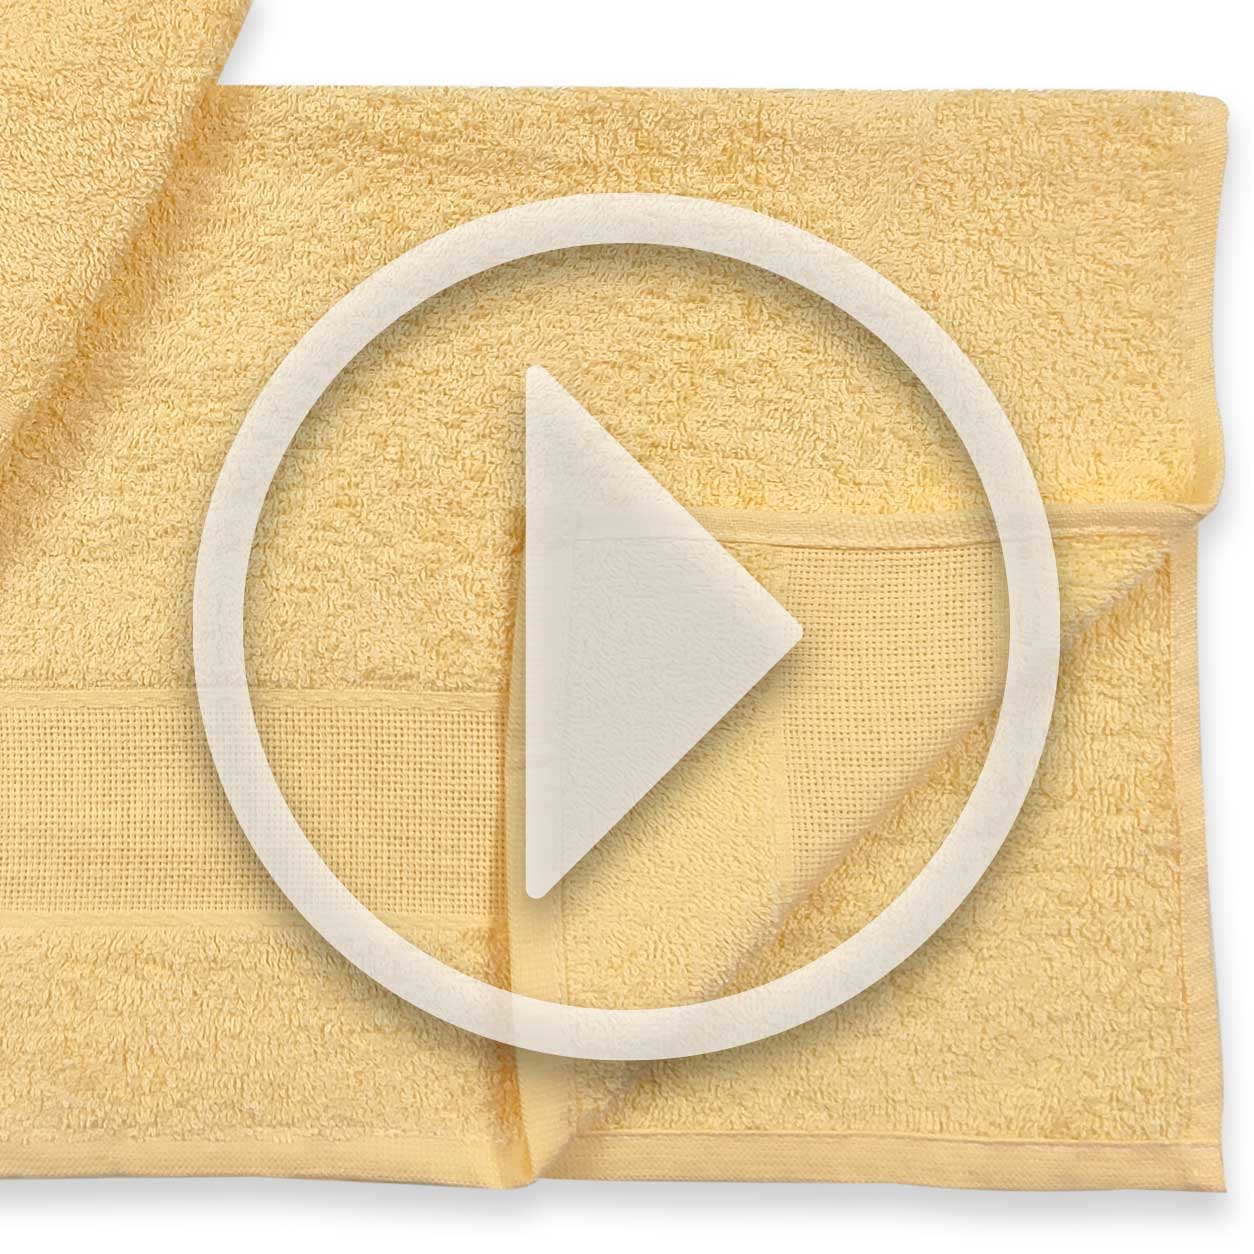 coppiola-asciugamani-gialli-video